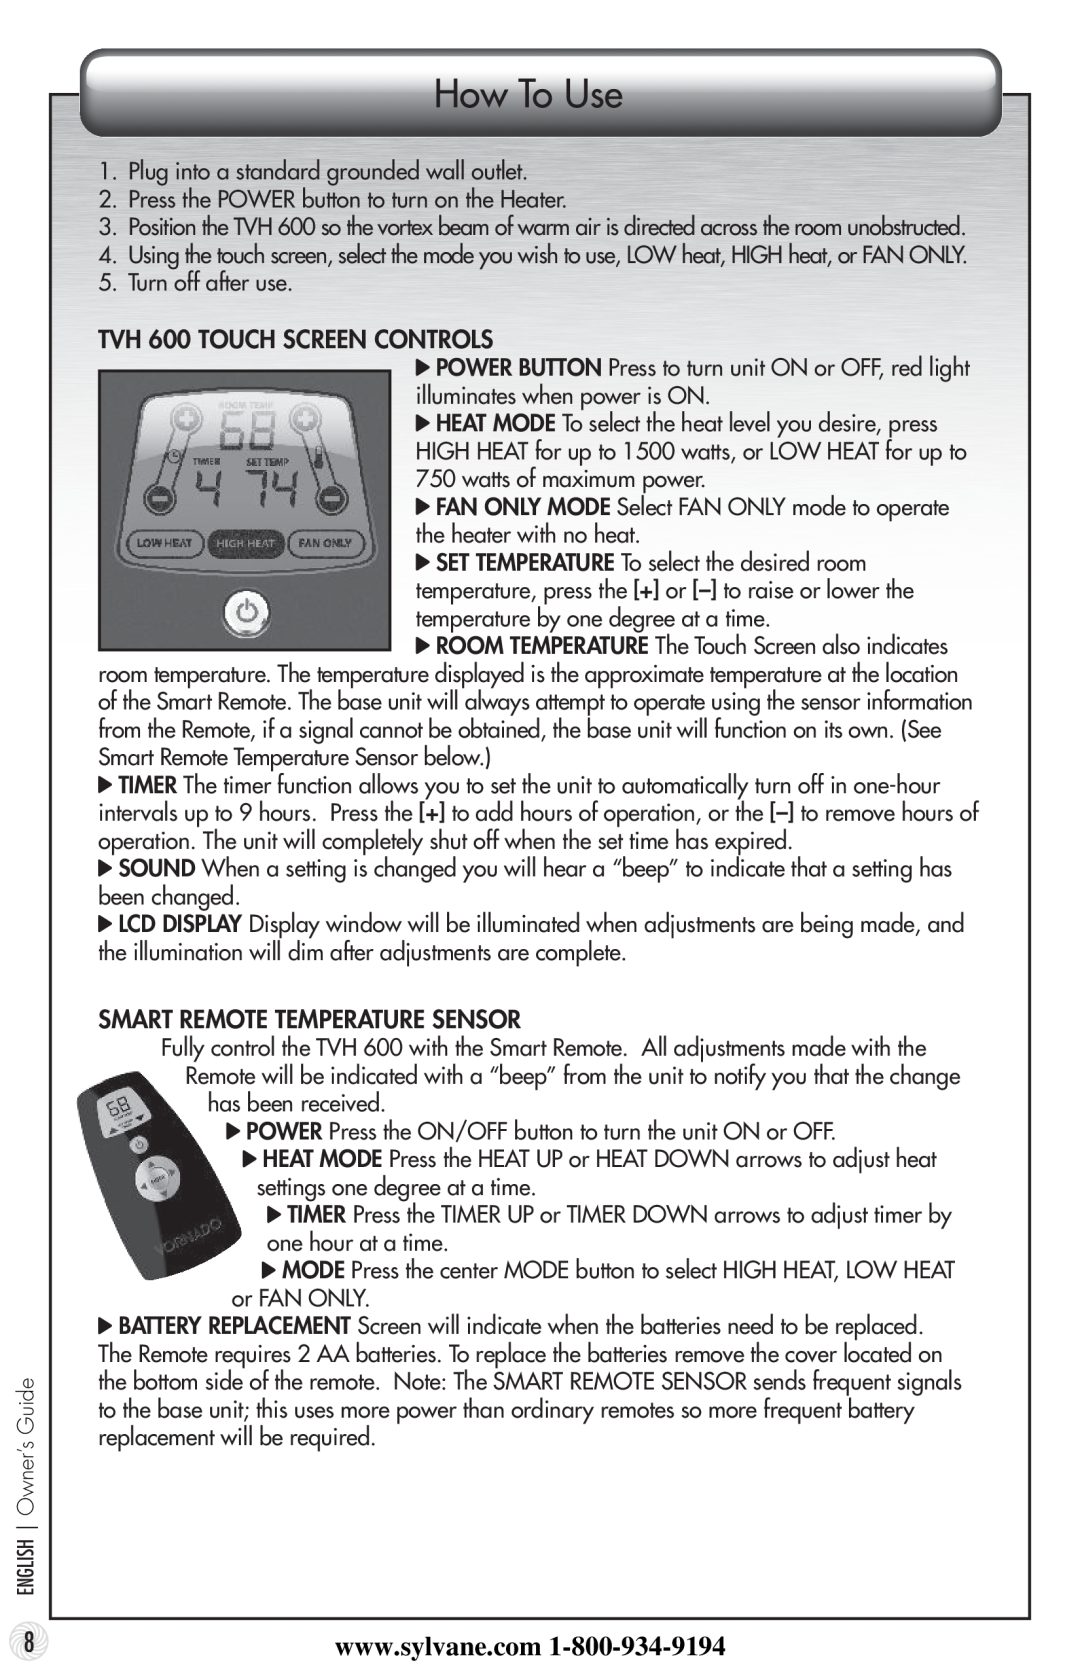 Vornado manual How To Use, TVH 600 TOUCH SCREEN CONTROLS, Smart Remote Temperature Sensor 